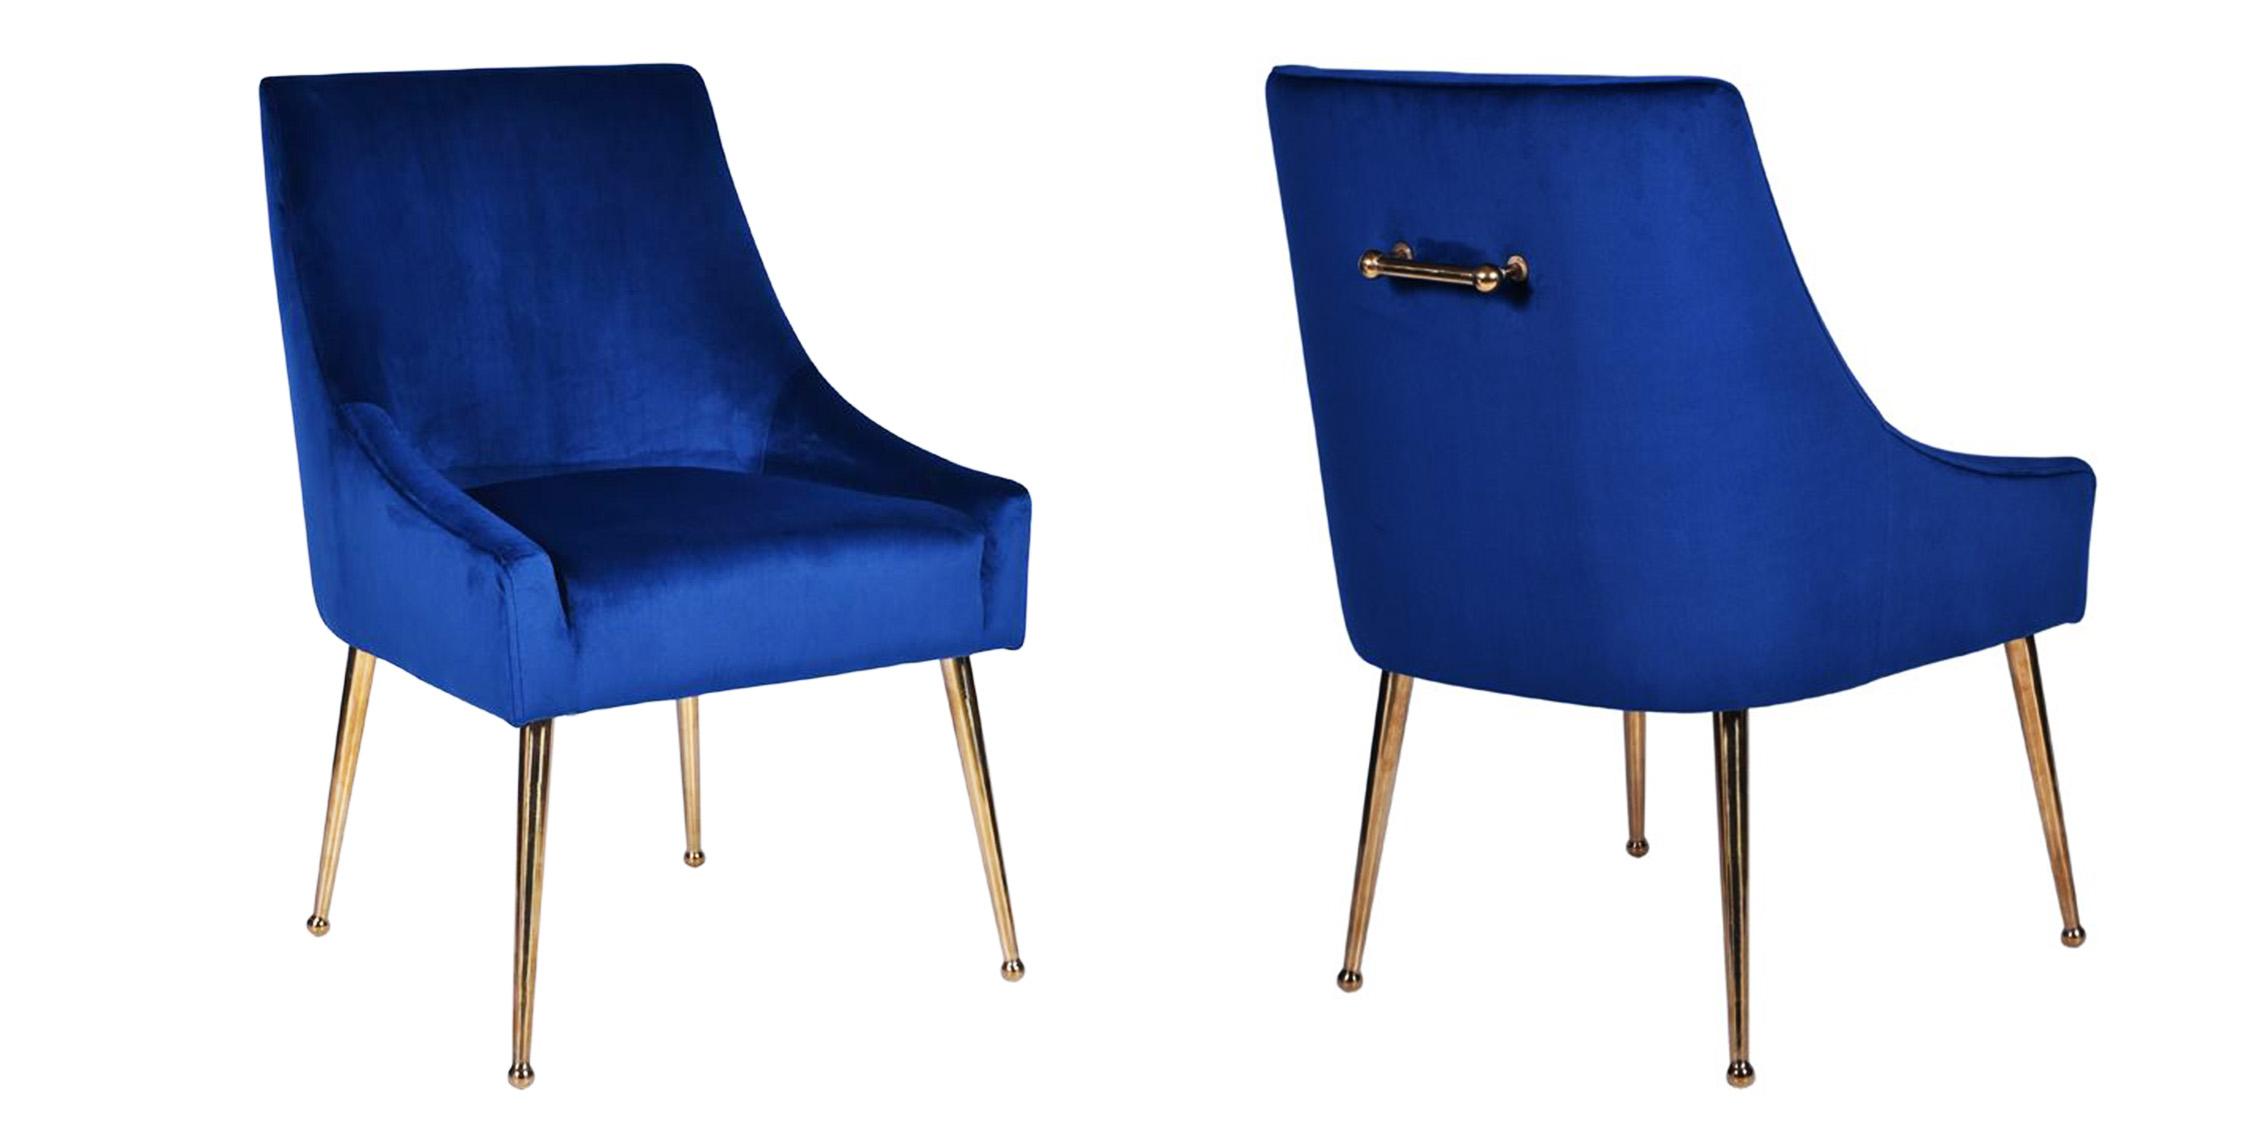 Contemporary, Modern Dining Chair Set VGRH-RHS-DC-101-BLU VGRH-RHS-DC-101-BLU in Gold, Blue Fabric